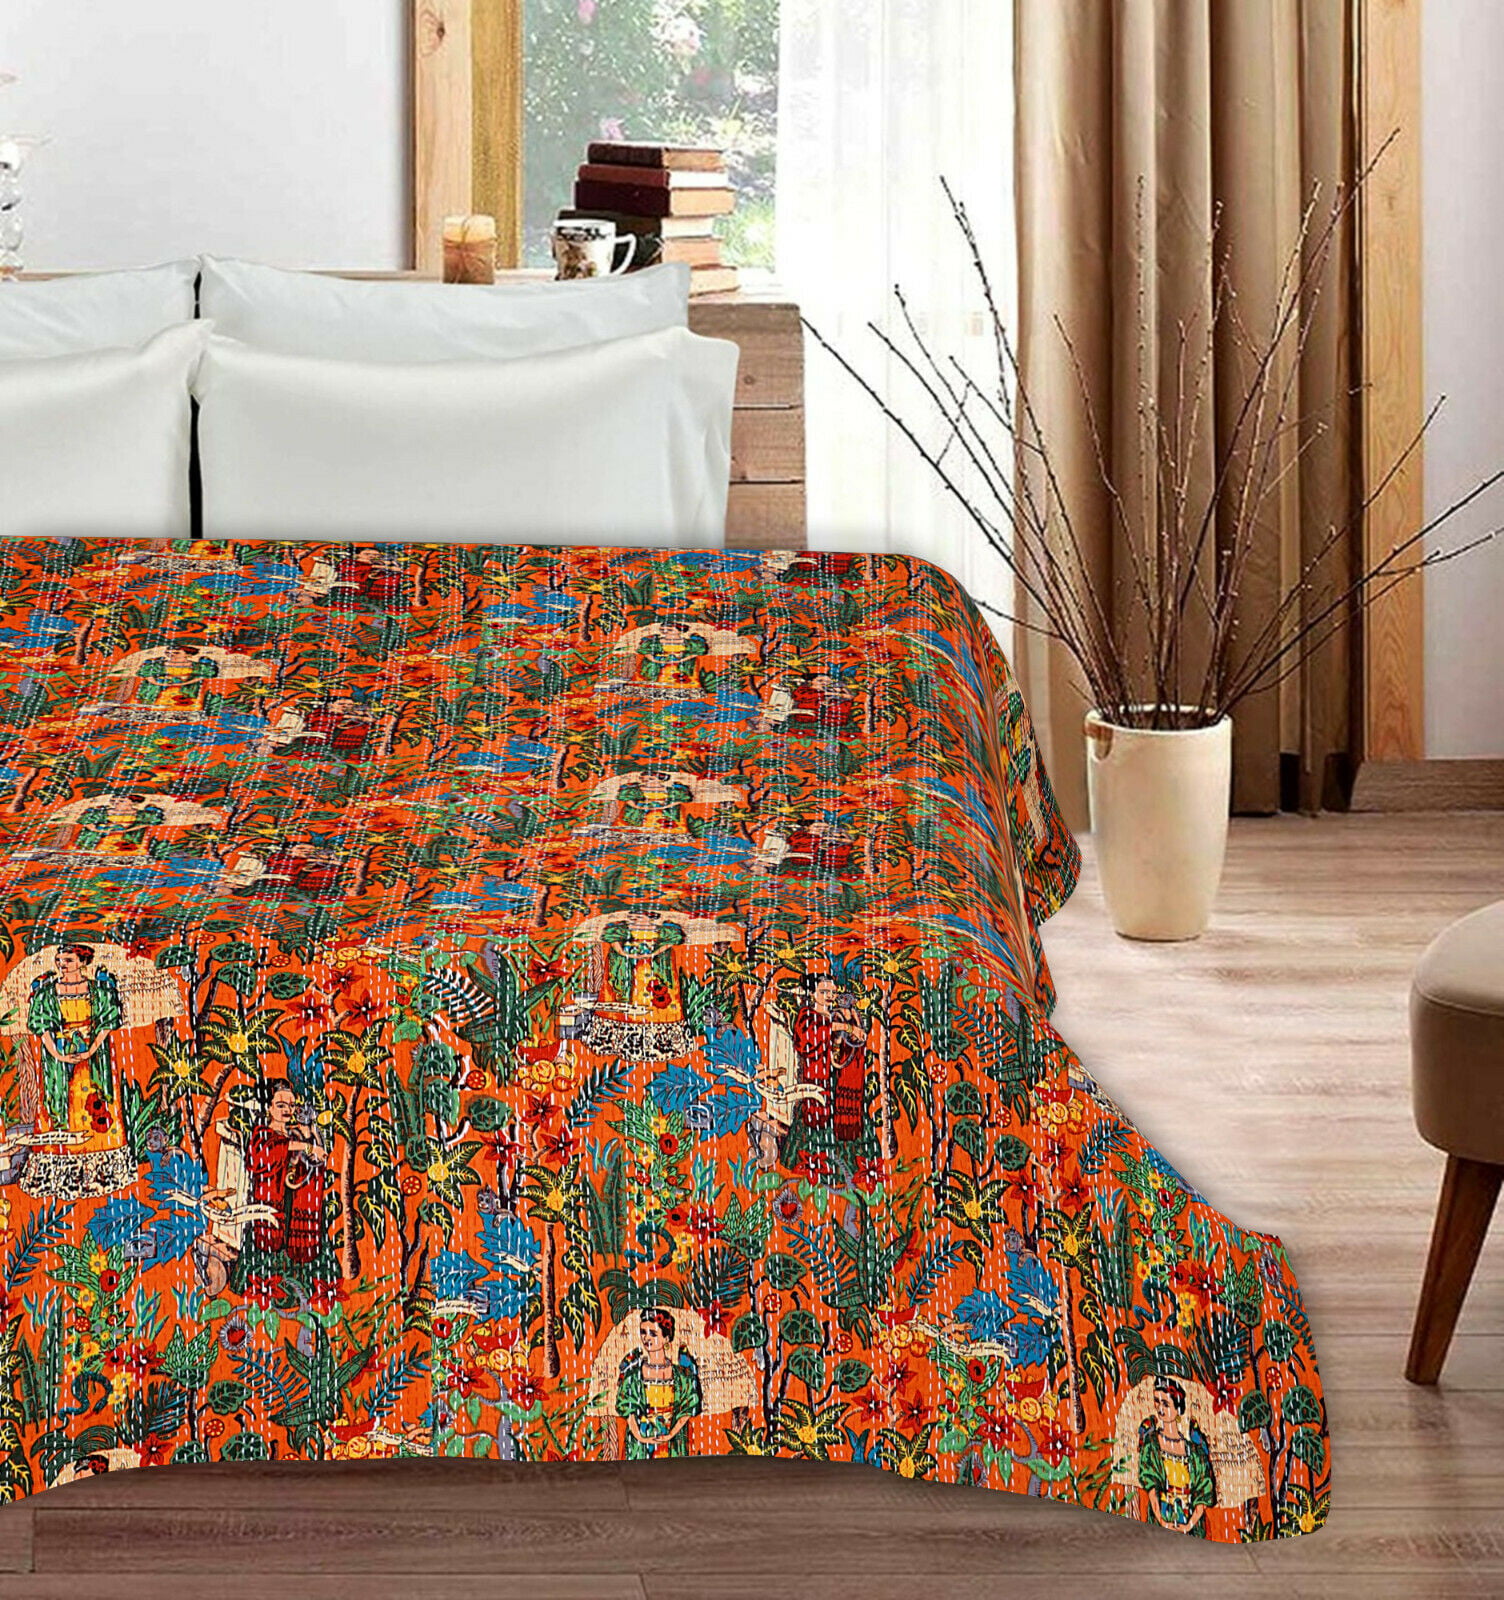 Indian Handmade Kantha Orange Ikat Cotton Quilt Queen Bedspread Blanket Throw 